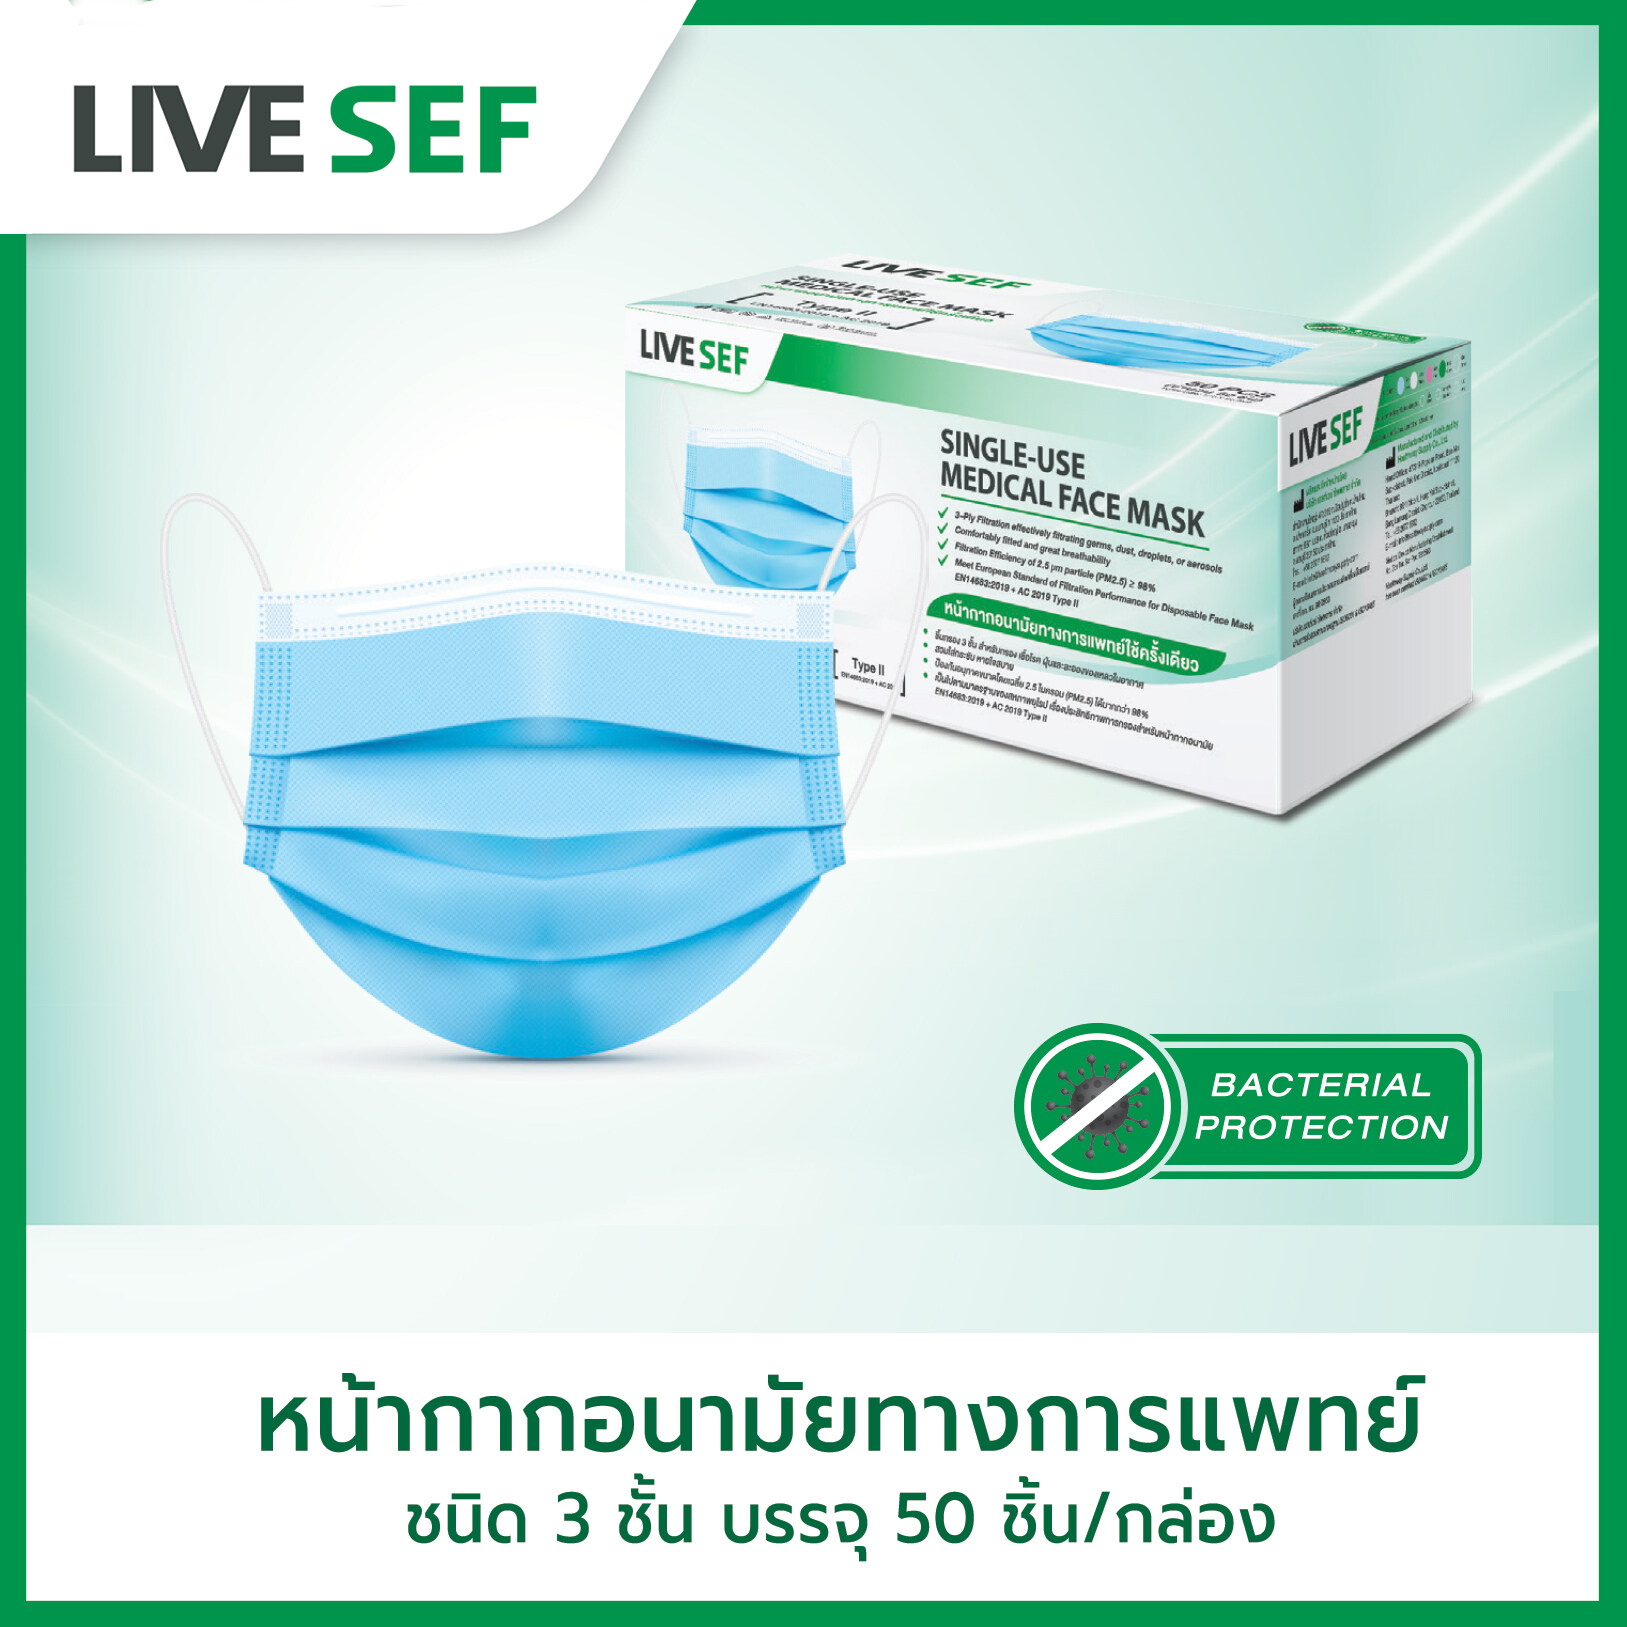 LIVE SEF หน้ากากอนามัยทางการแพทย์ 3 ชั้น มาตรฐานอย. ผลิตในไทย (50ชิ้น/กล่อง) - สีฟ้า